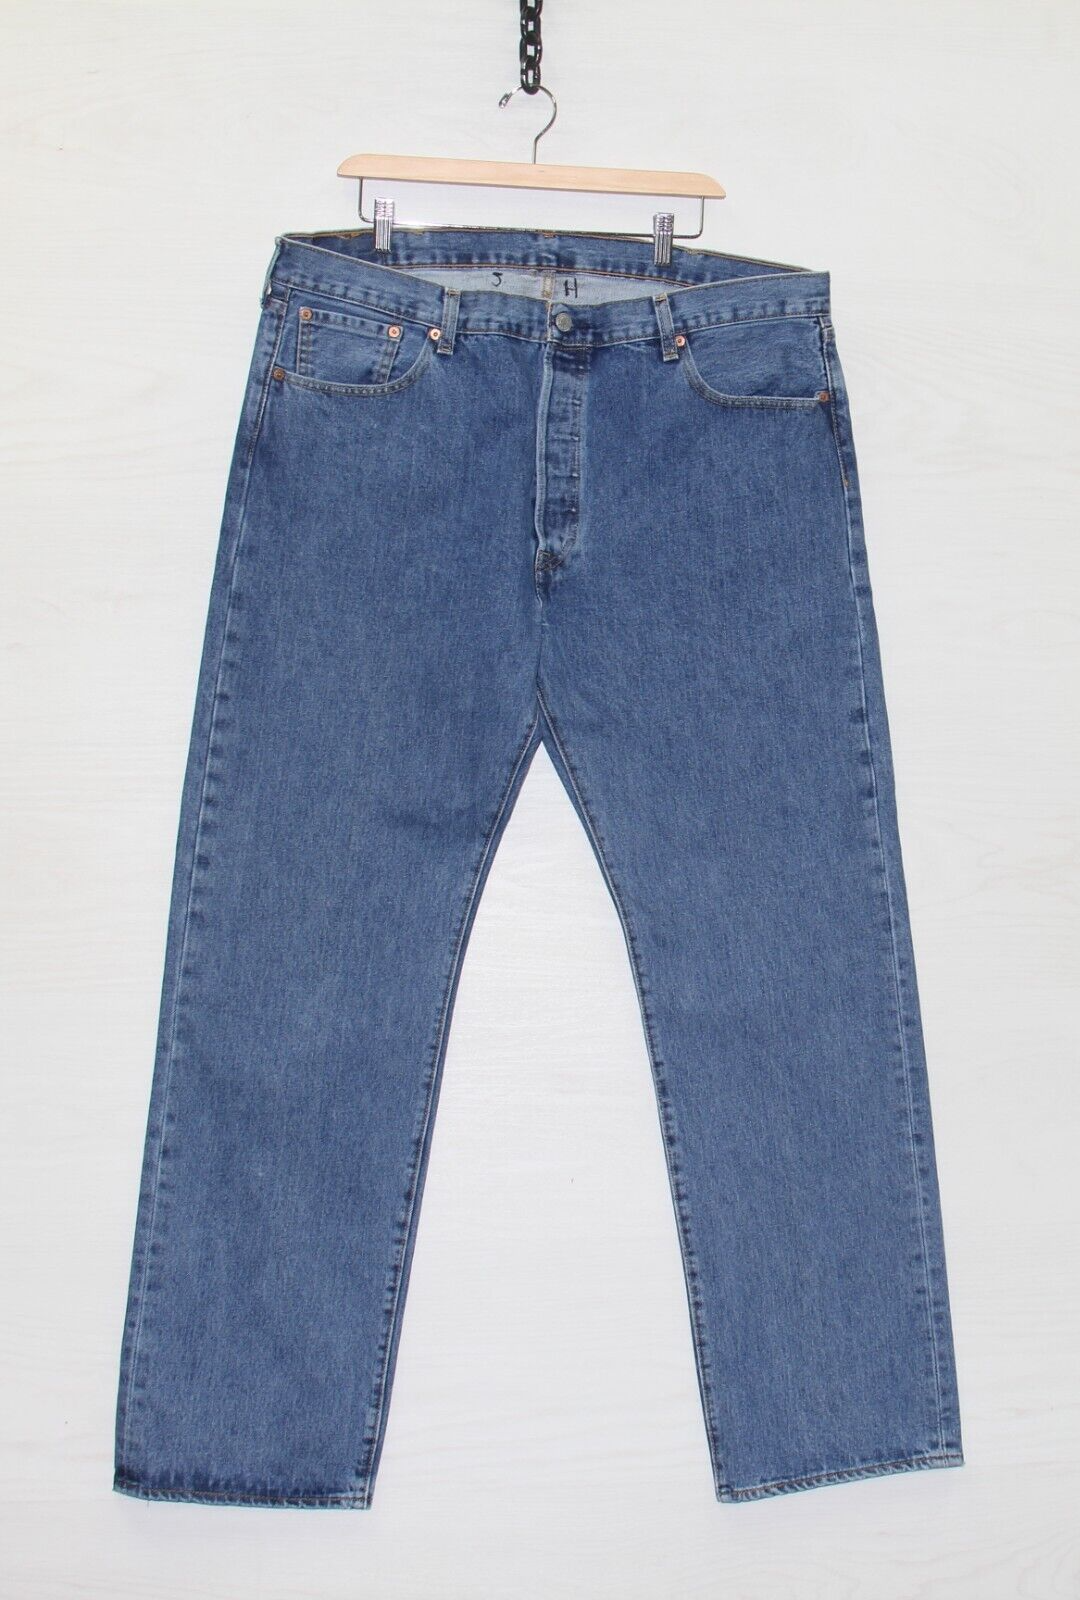 Vintage Levi Strauss & Co 501 Denim Jeans Size 40 X 32 Blue